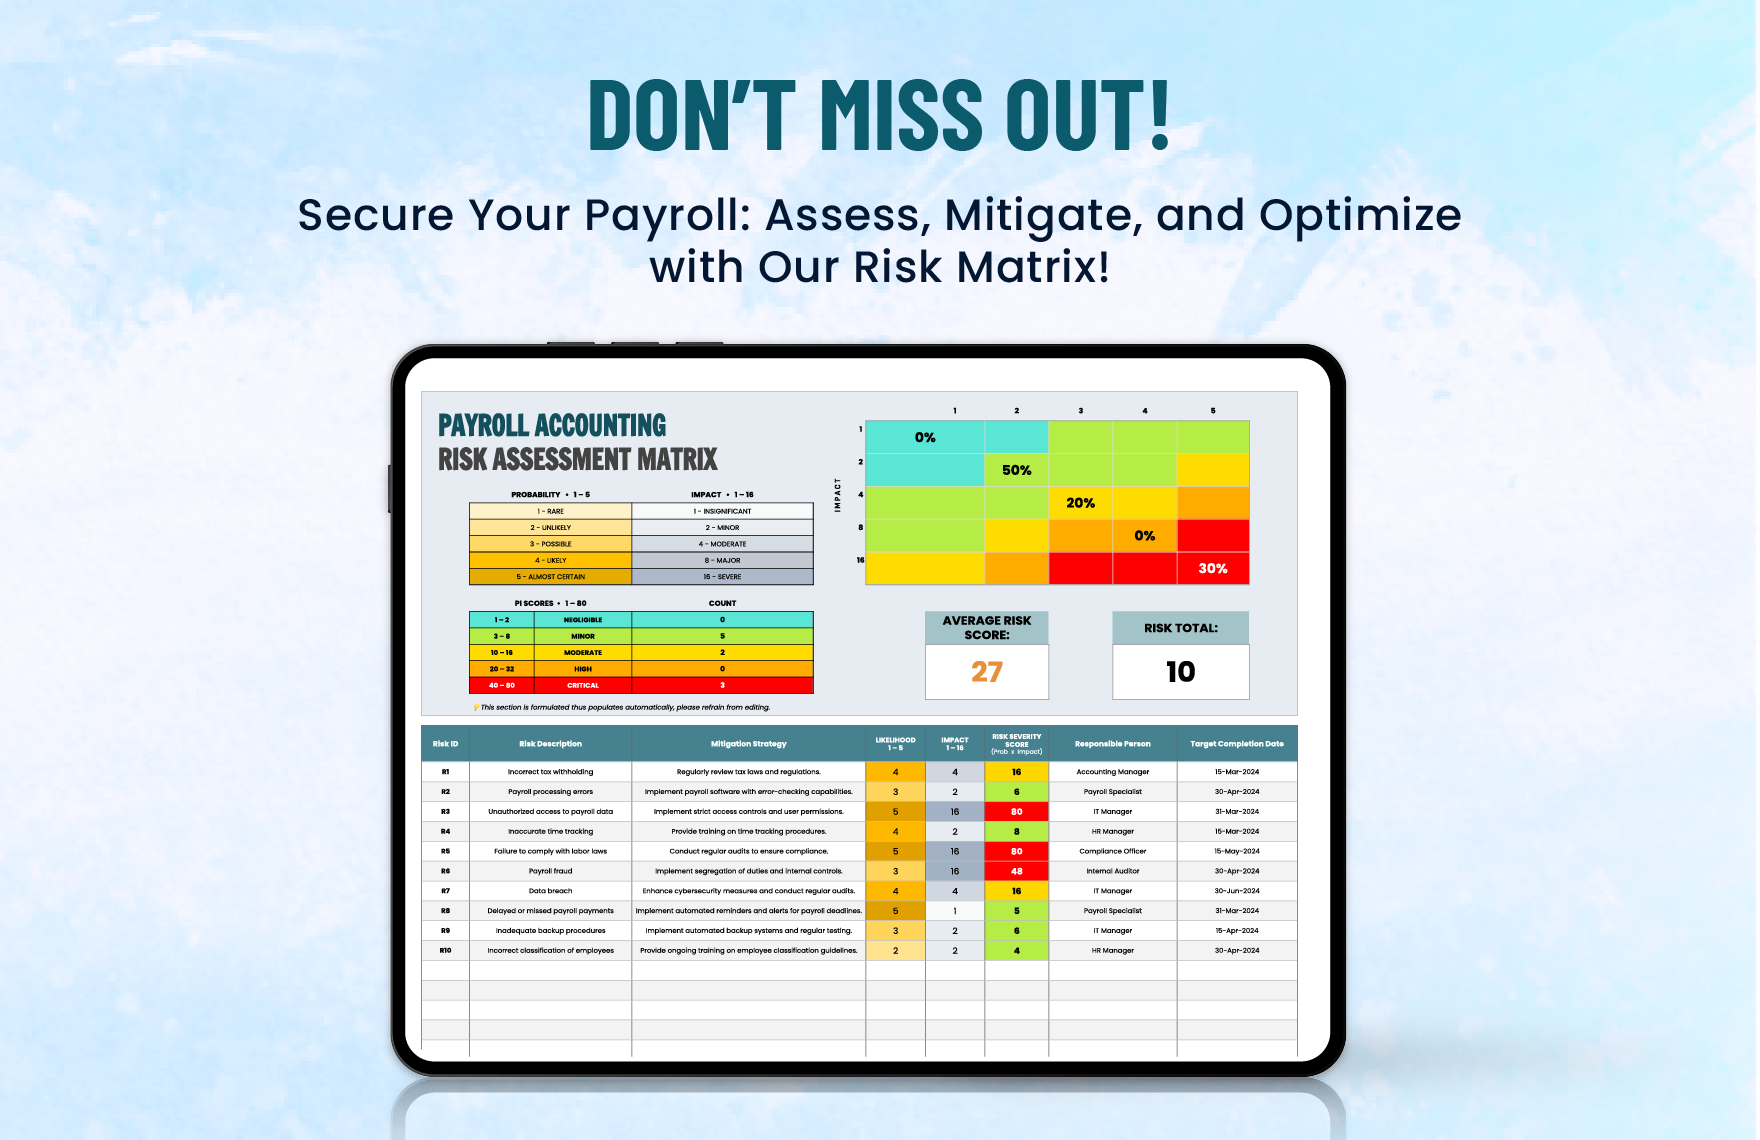 Payroll Accounting Risk Assessment Matrix Template